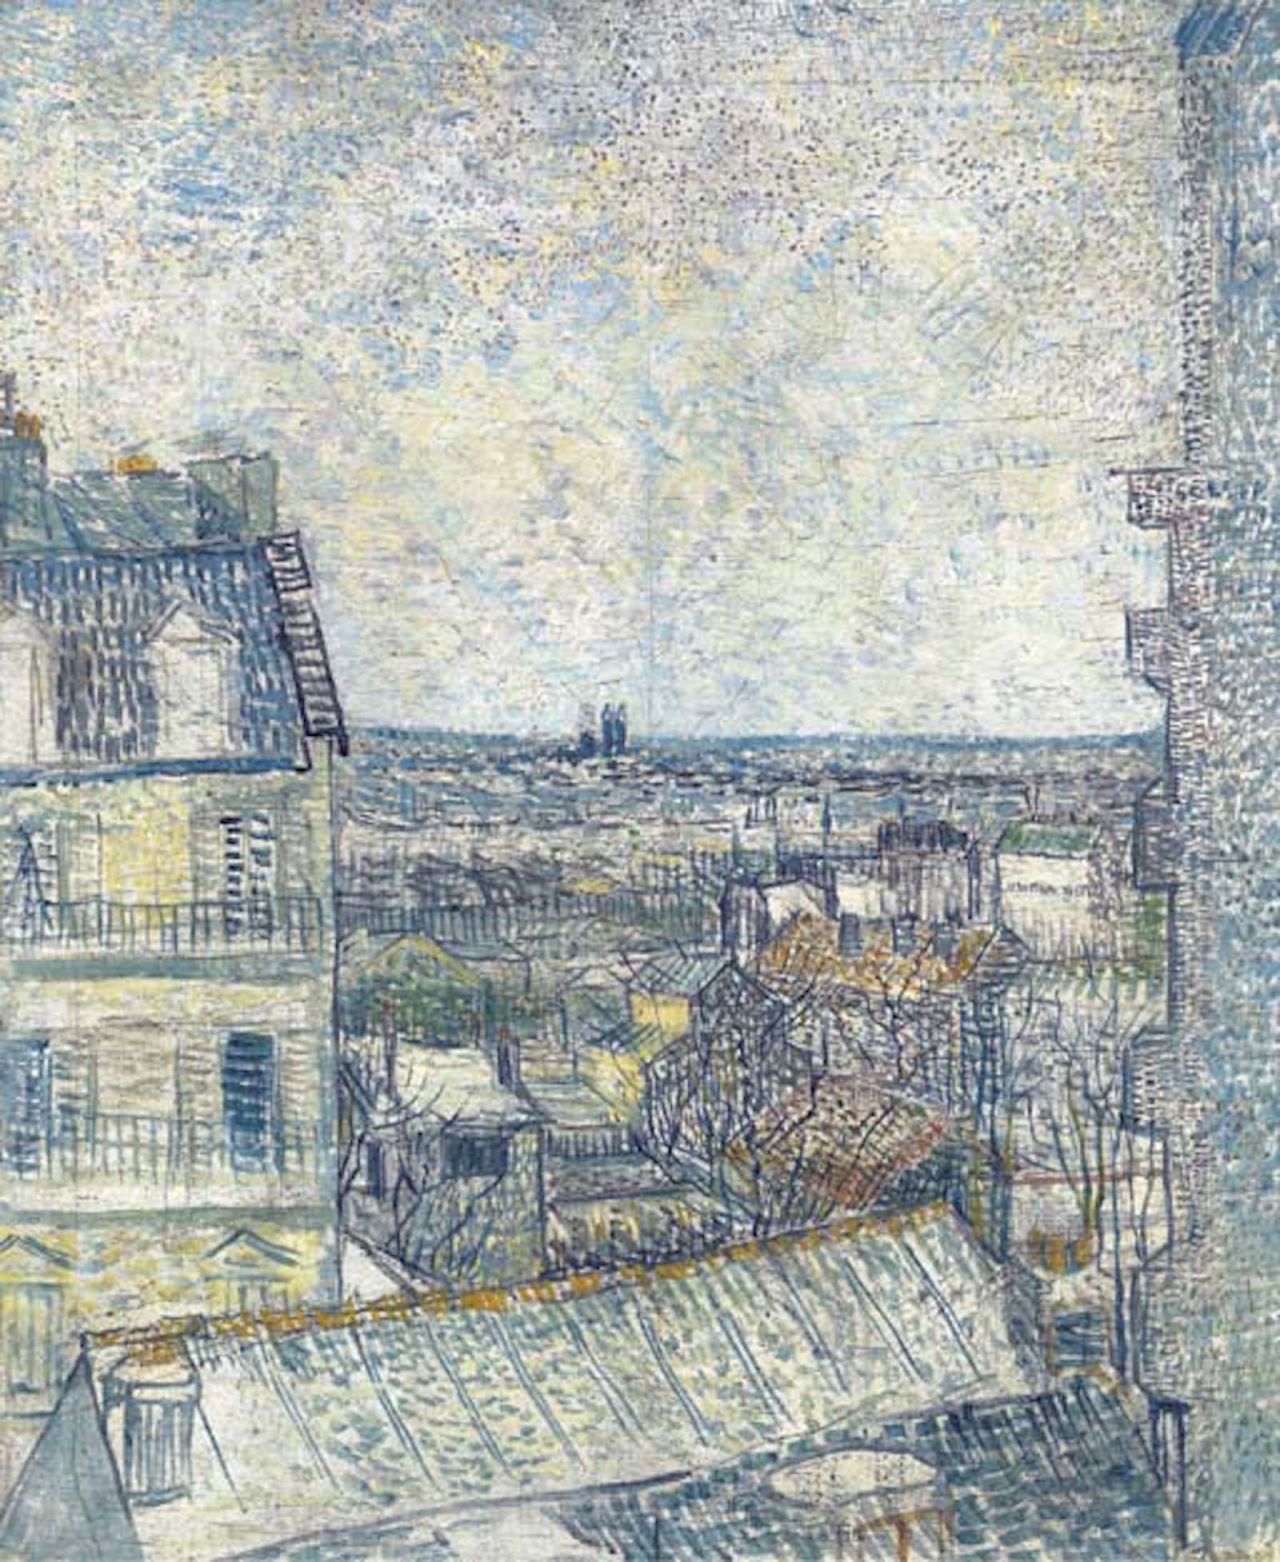 Vincent van Gogh's "Vue de la chambre de l'artiste" was incldued in the consigment.  